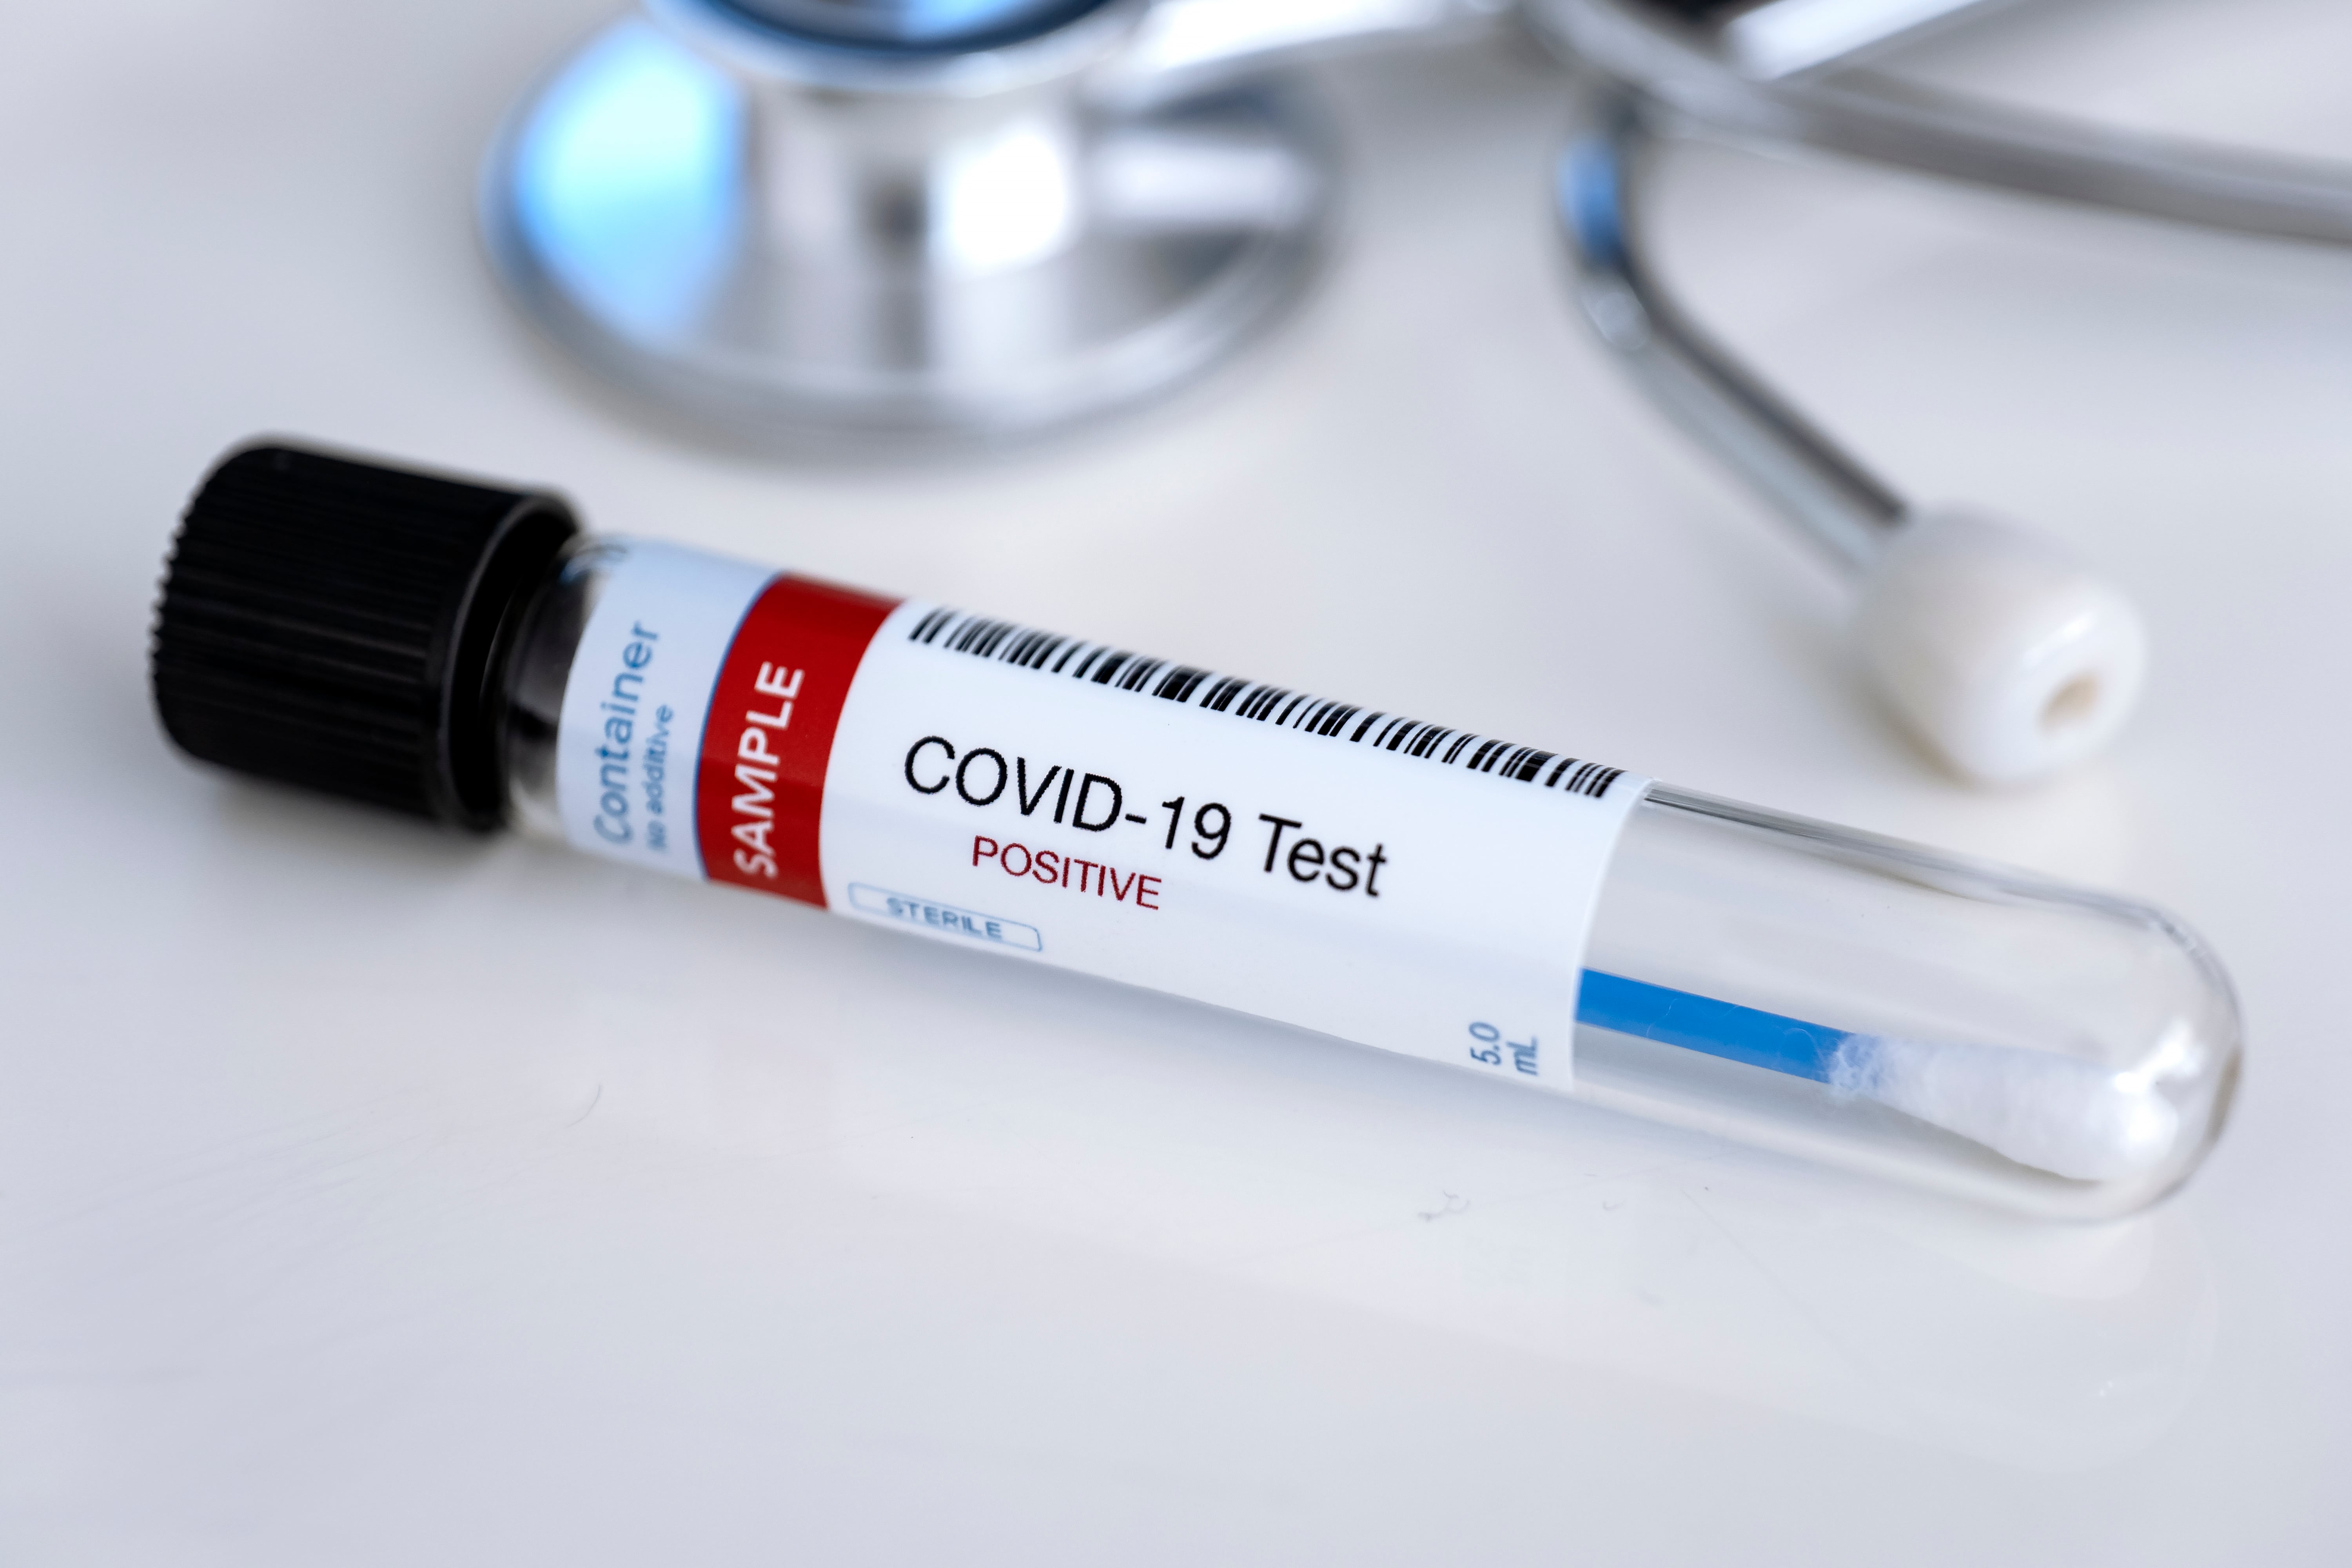 Coronavirus Test 2020